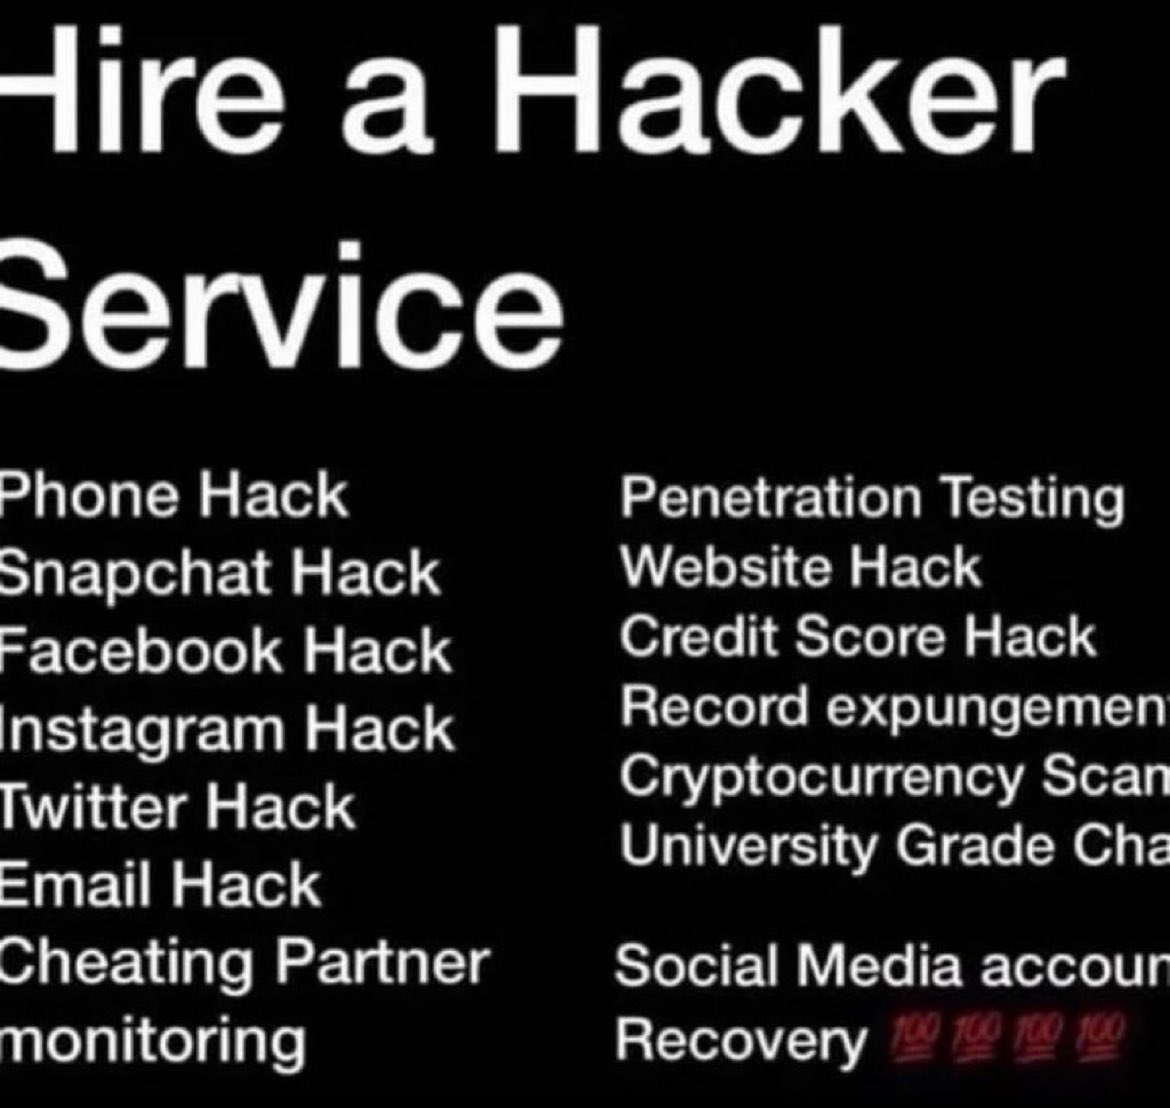 #hackedcoinbase #hackedaccounts #professionalhacker #disabledaccount #hackedinstagram #accountforsale #bannedpsn #accountrecovery #bannedtiktok #hacked #suspendedtwitter #usahacker #hackers #hack #hacking #hacker #hacks #hackedemails #hackedinstagram #hackedaccount #hacked #hack